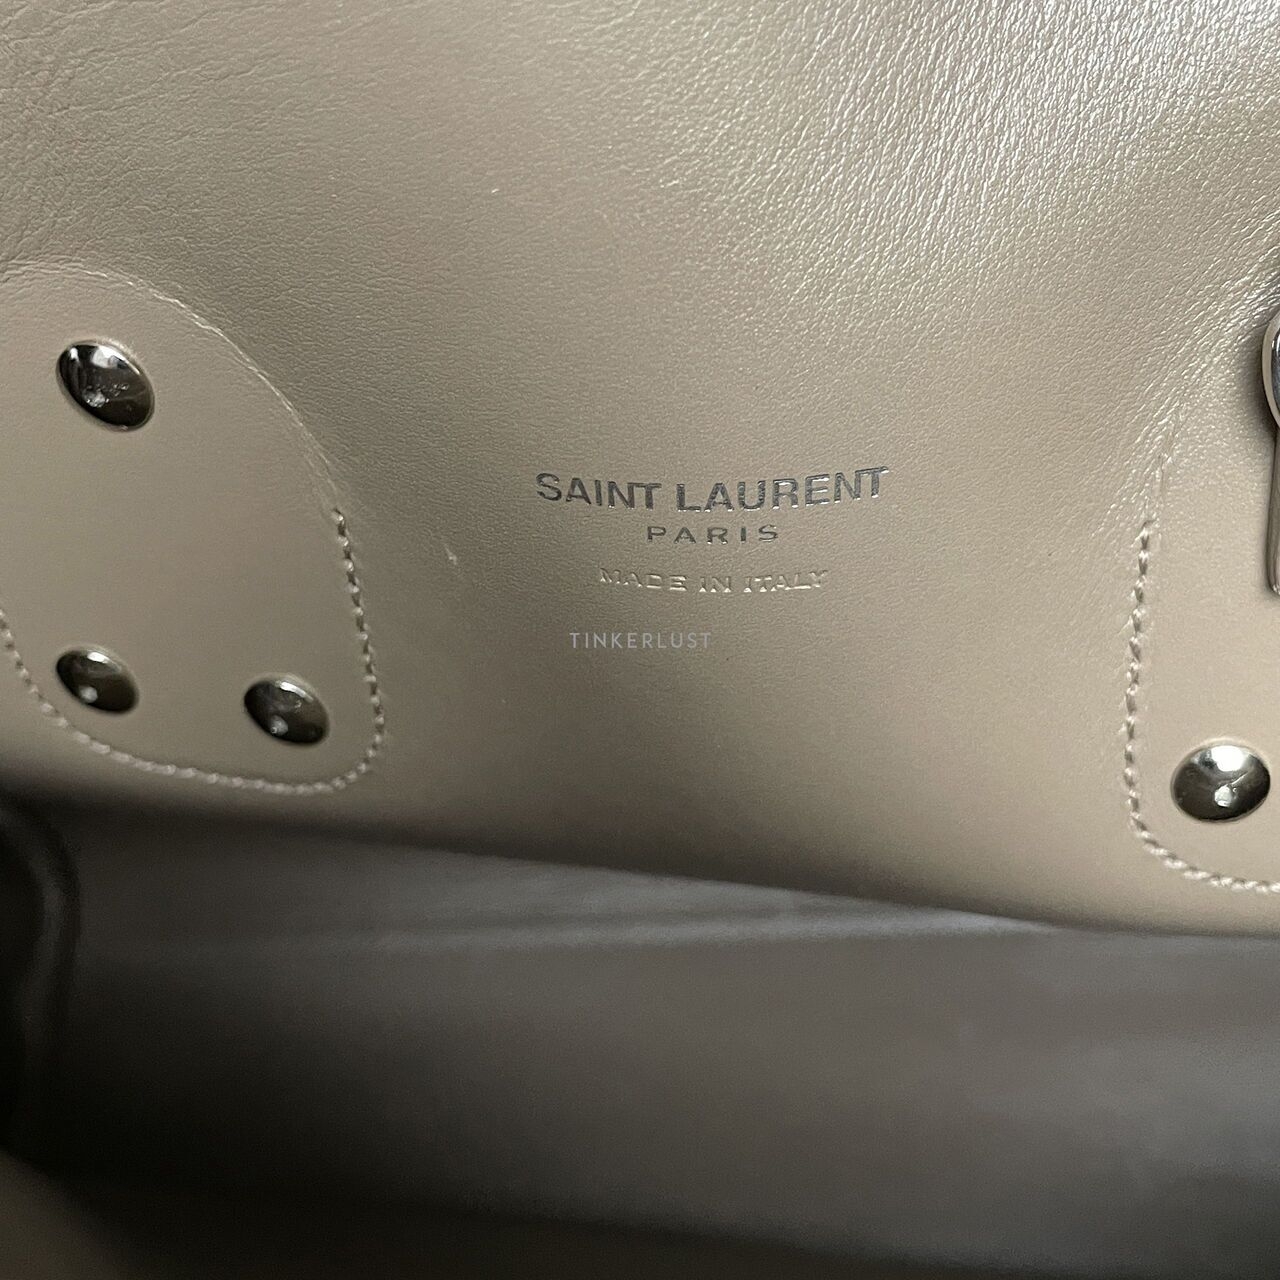 Saint Laurent Sac De Jour Small Taupe Pebbled Leather SHW Tote Bag